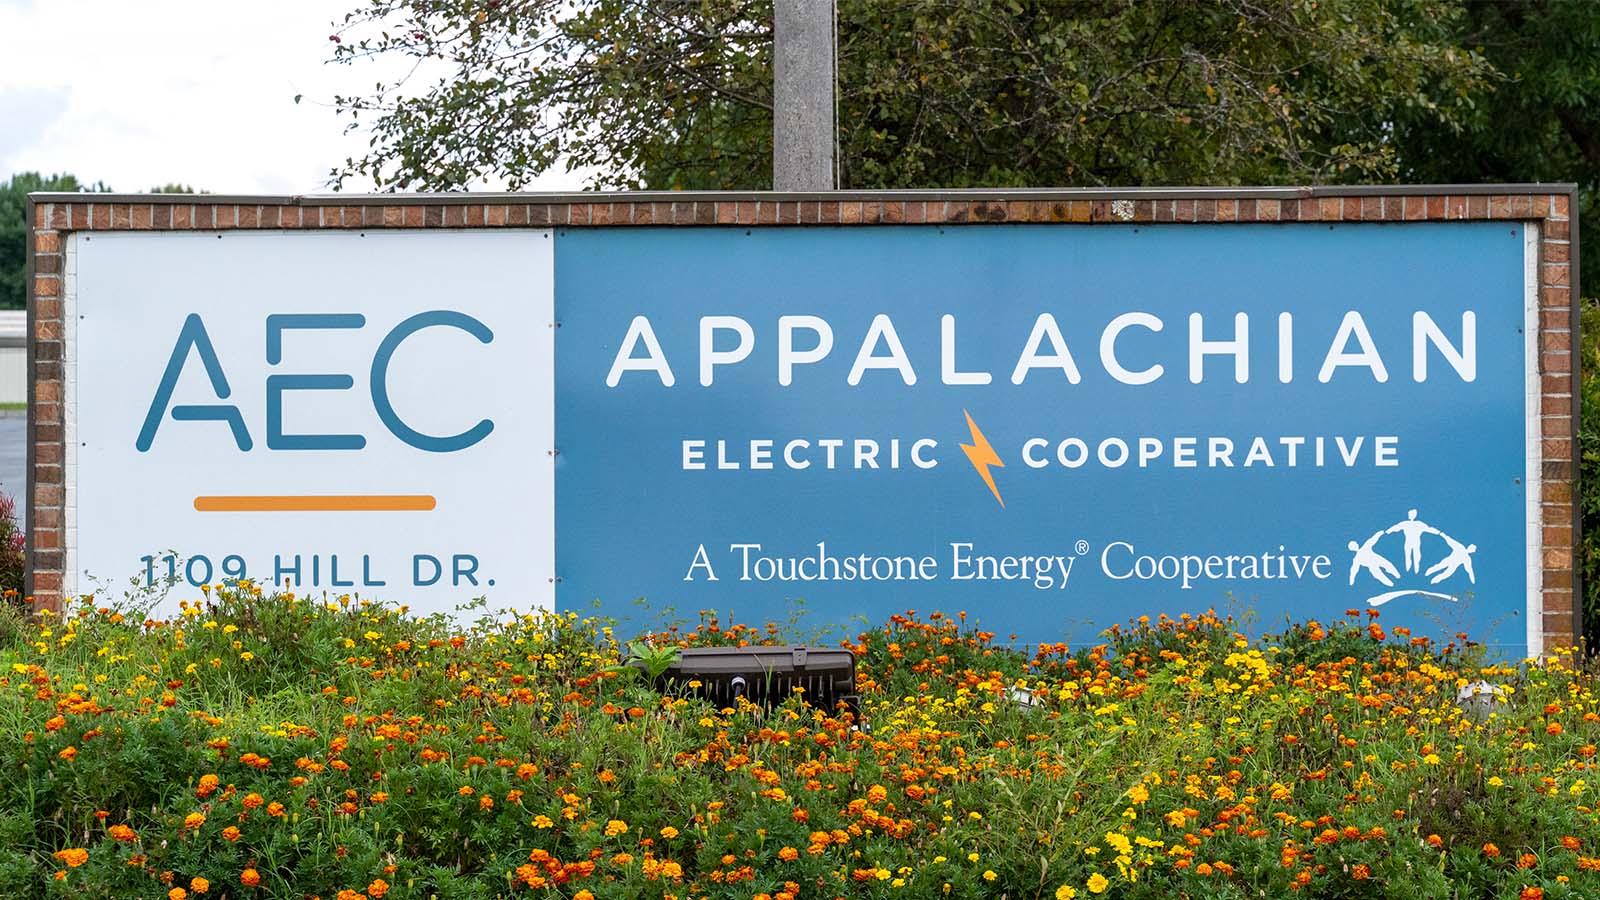 Appalachian Electric